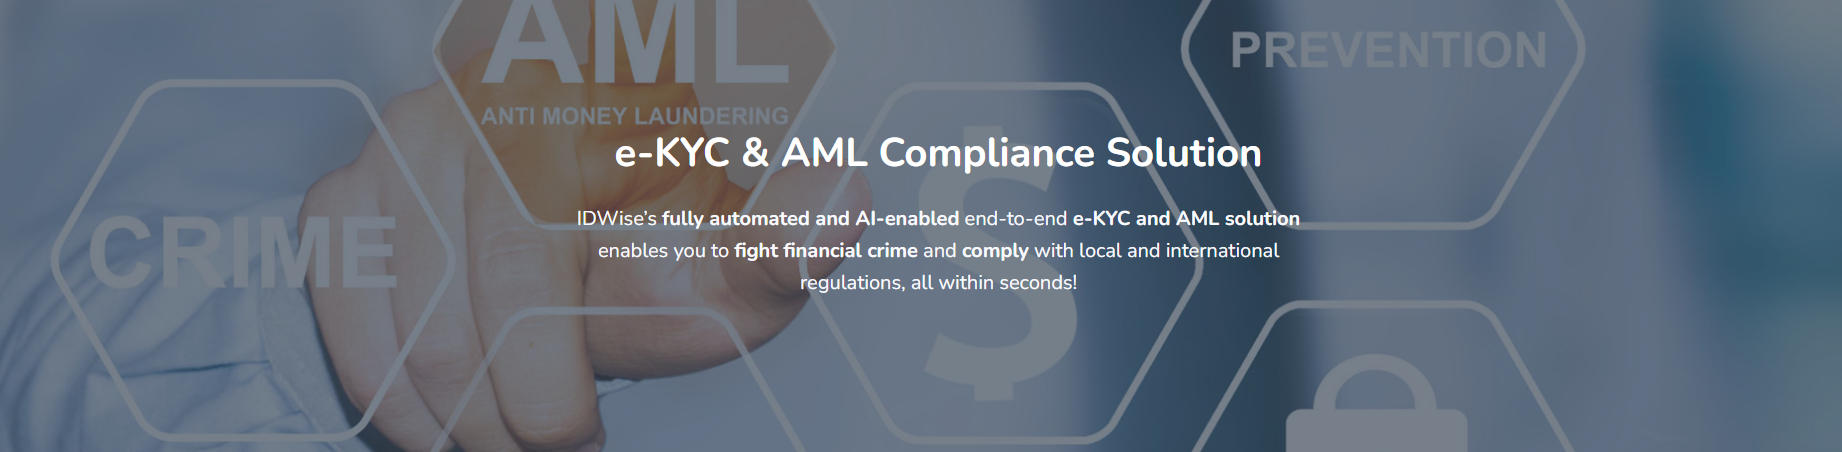 e-KYC & AML Compliance Solution